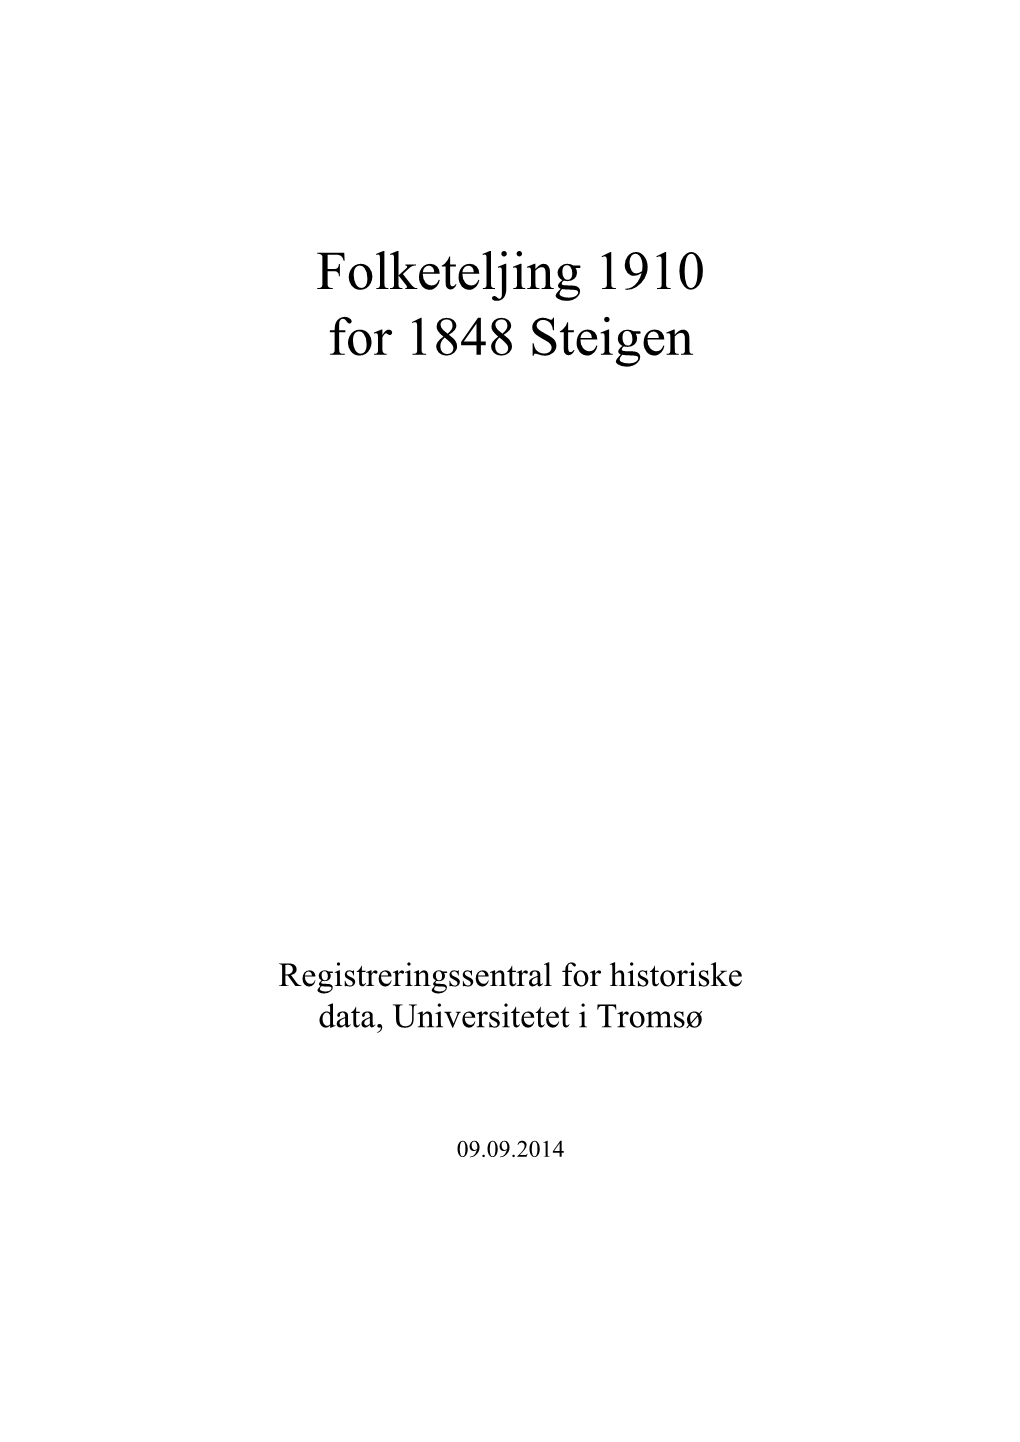 Folketeljing 1910 for 1848 Steigen